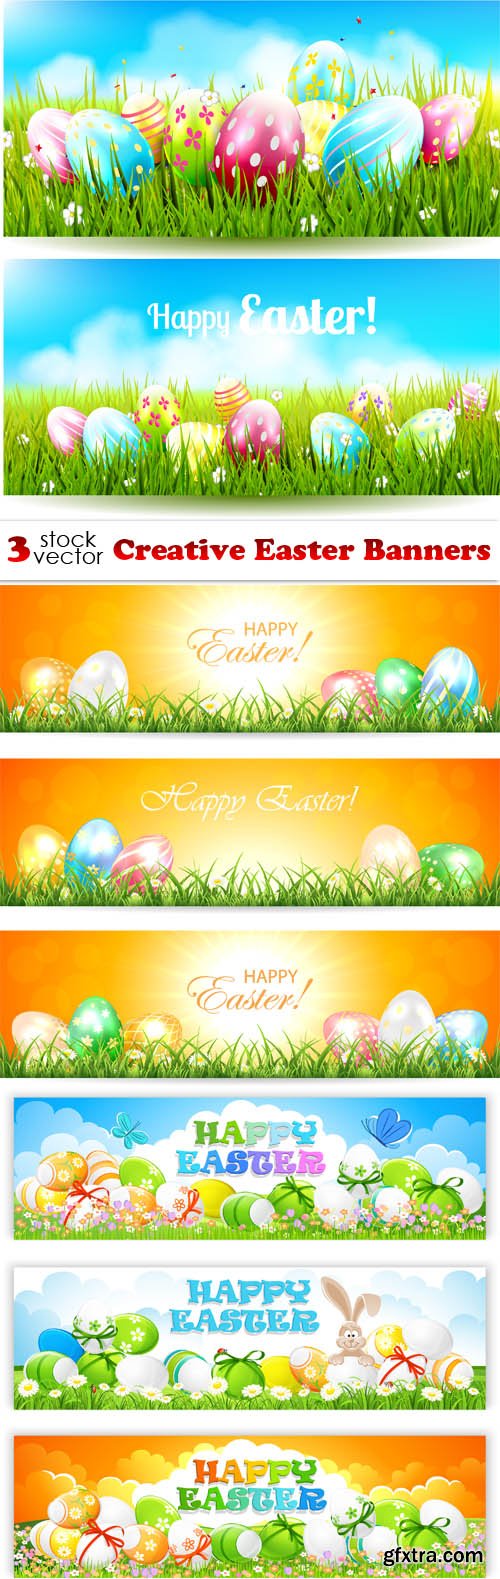 Vectors - Creative Easter Banners